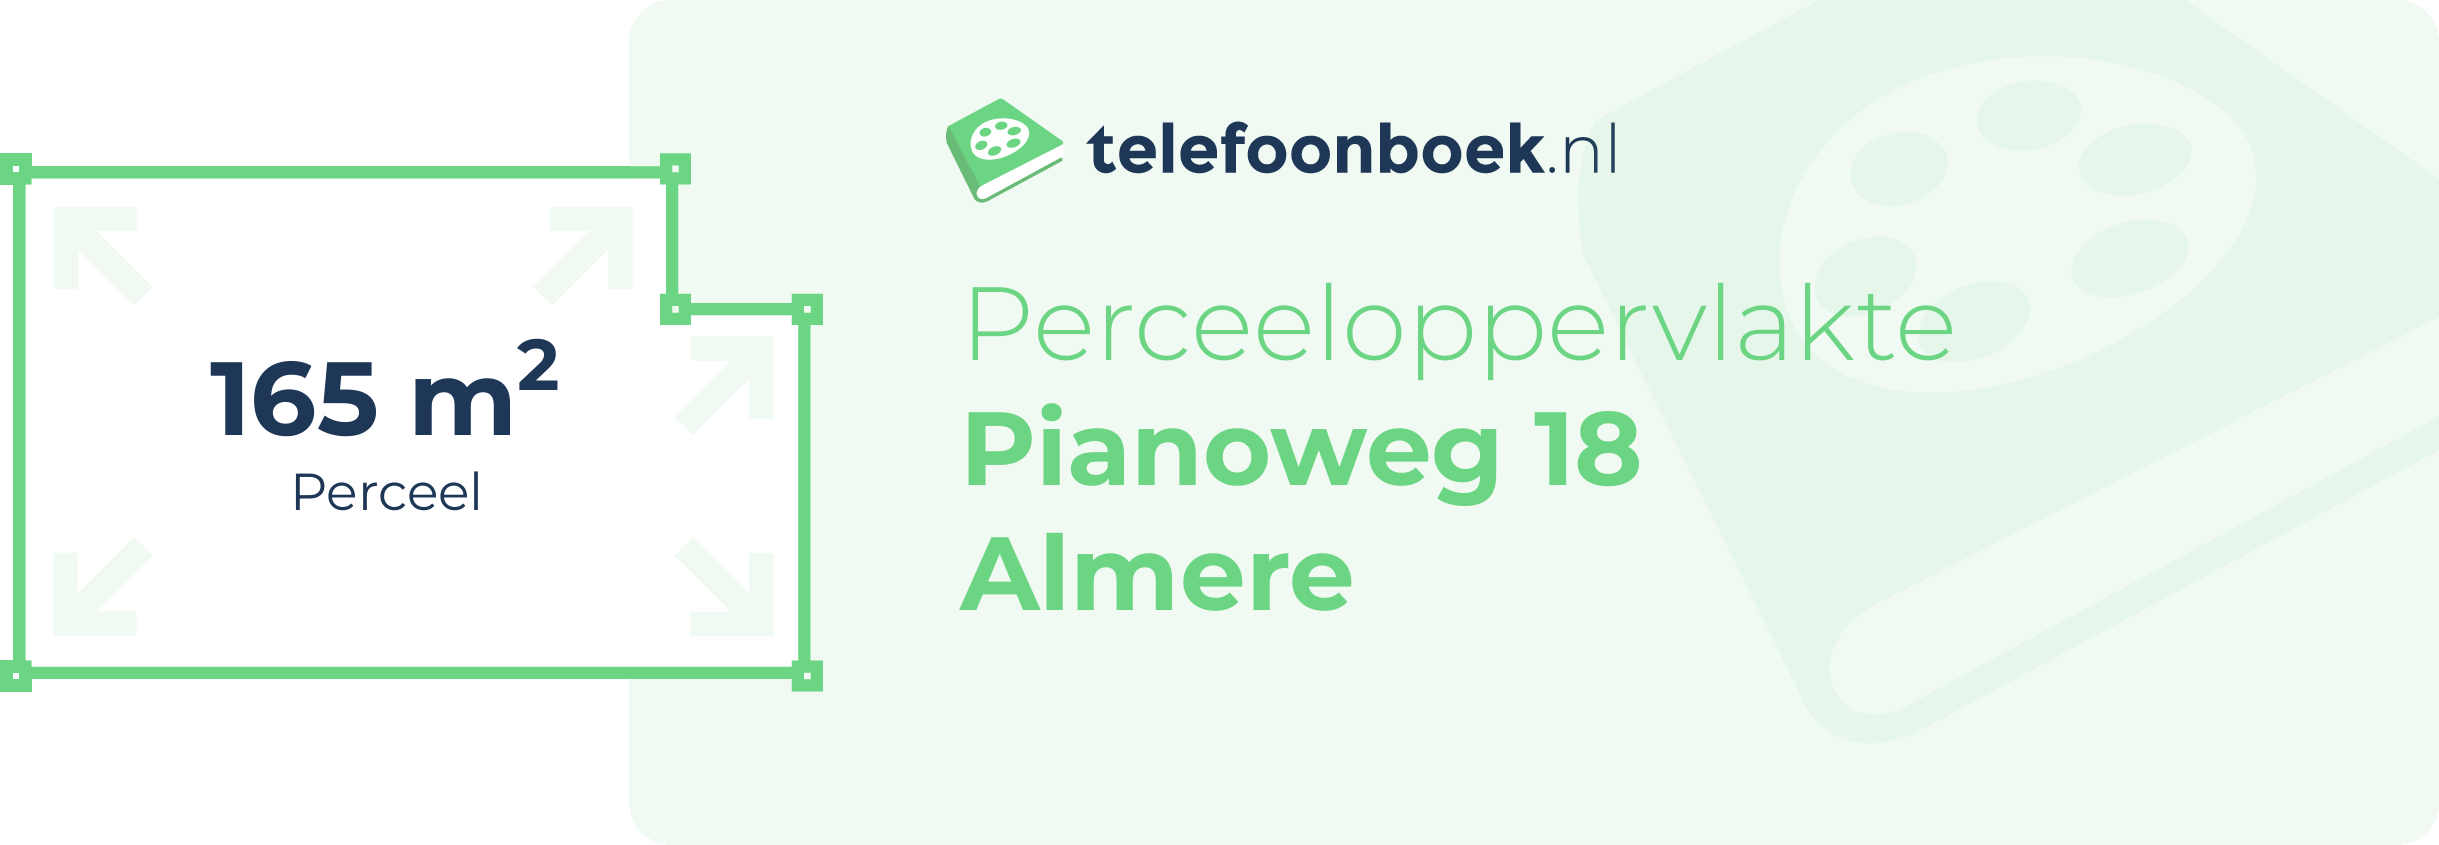 Perceeloppervlakte Pianoweg 18 Almere